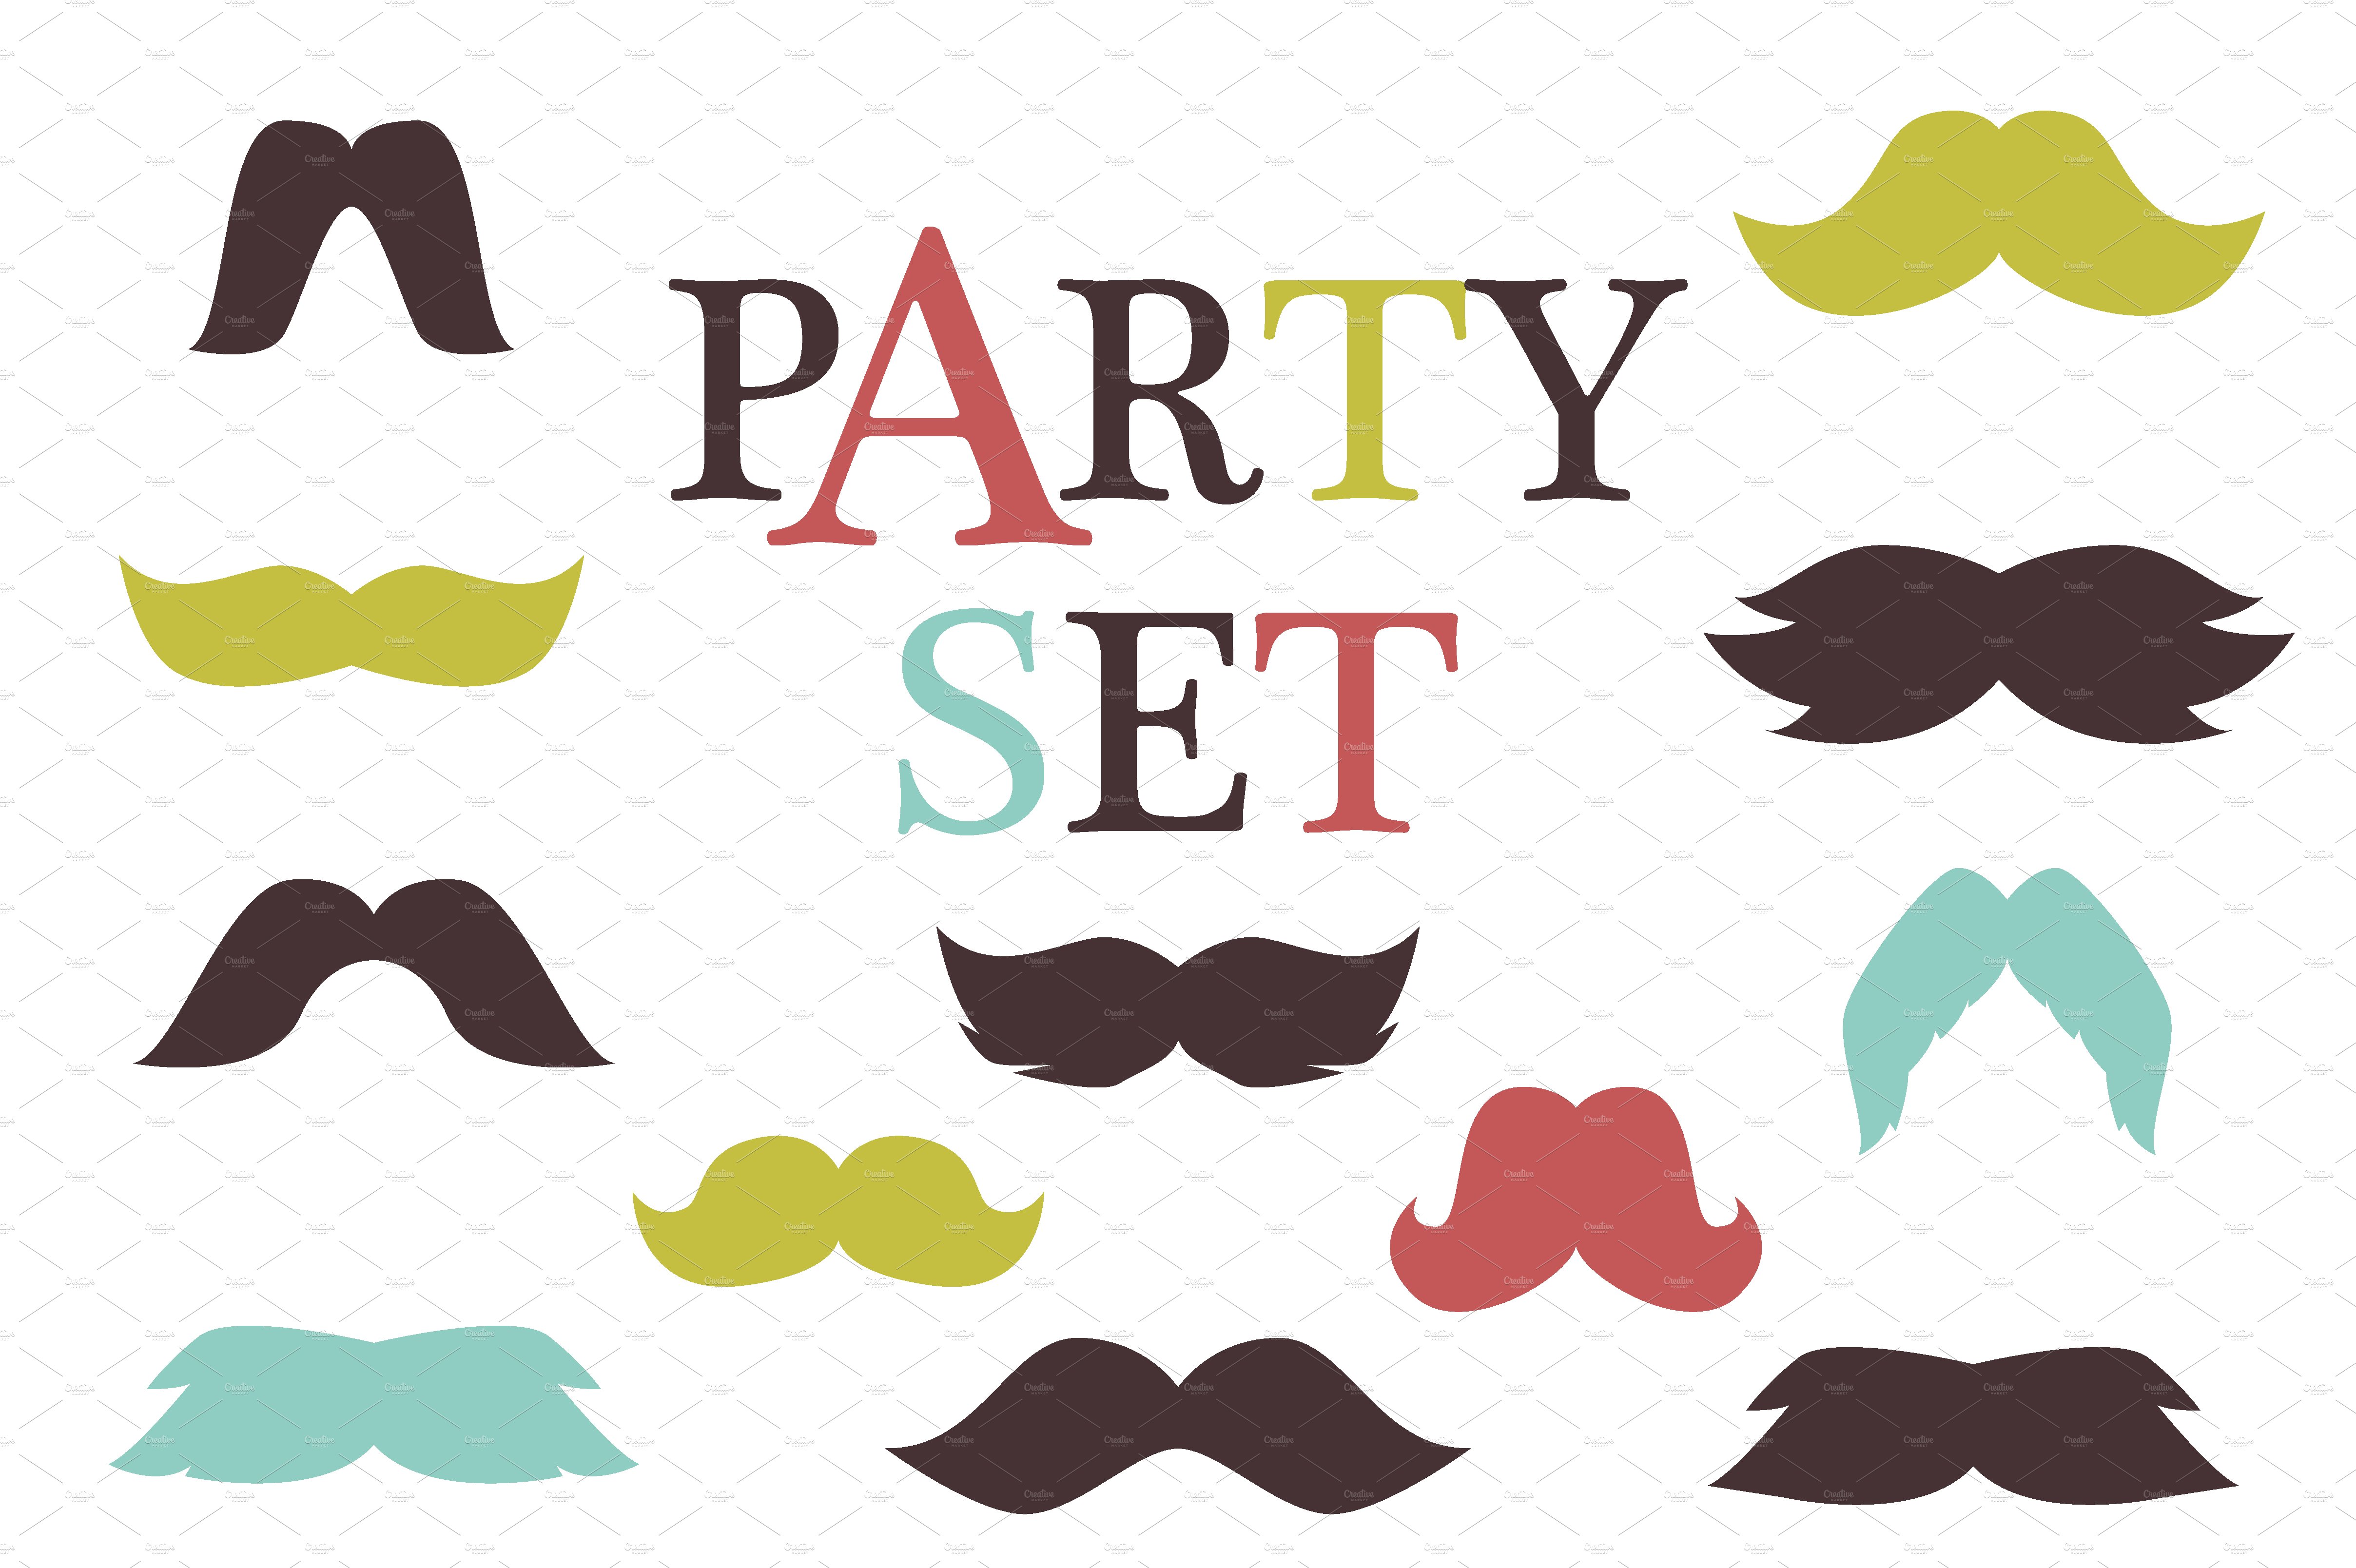 Retro party set vector cover image.